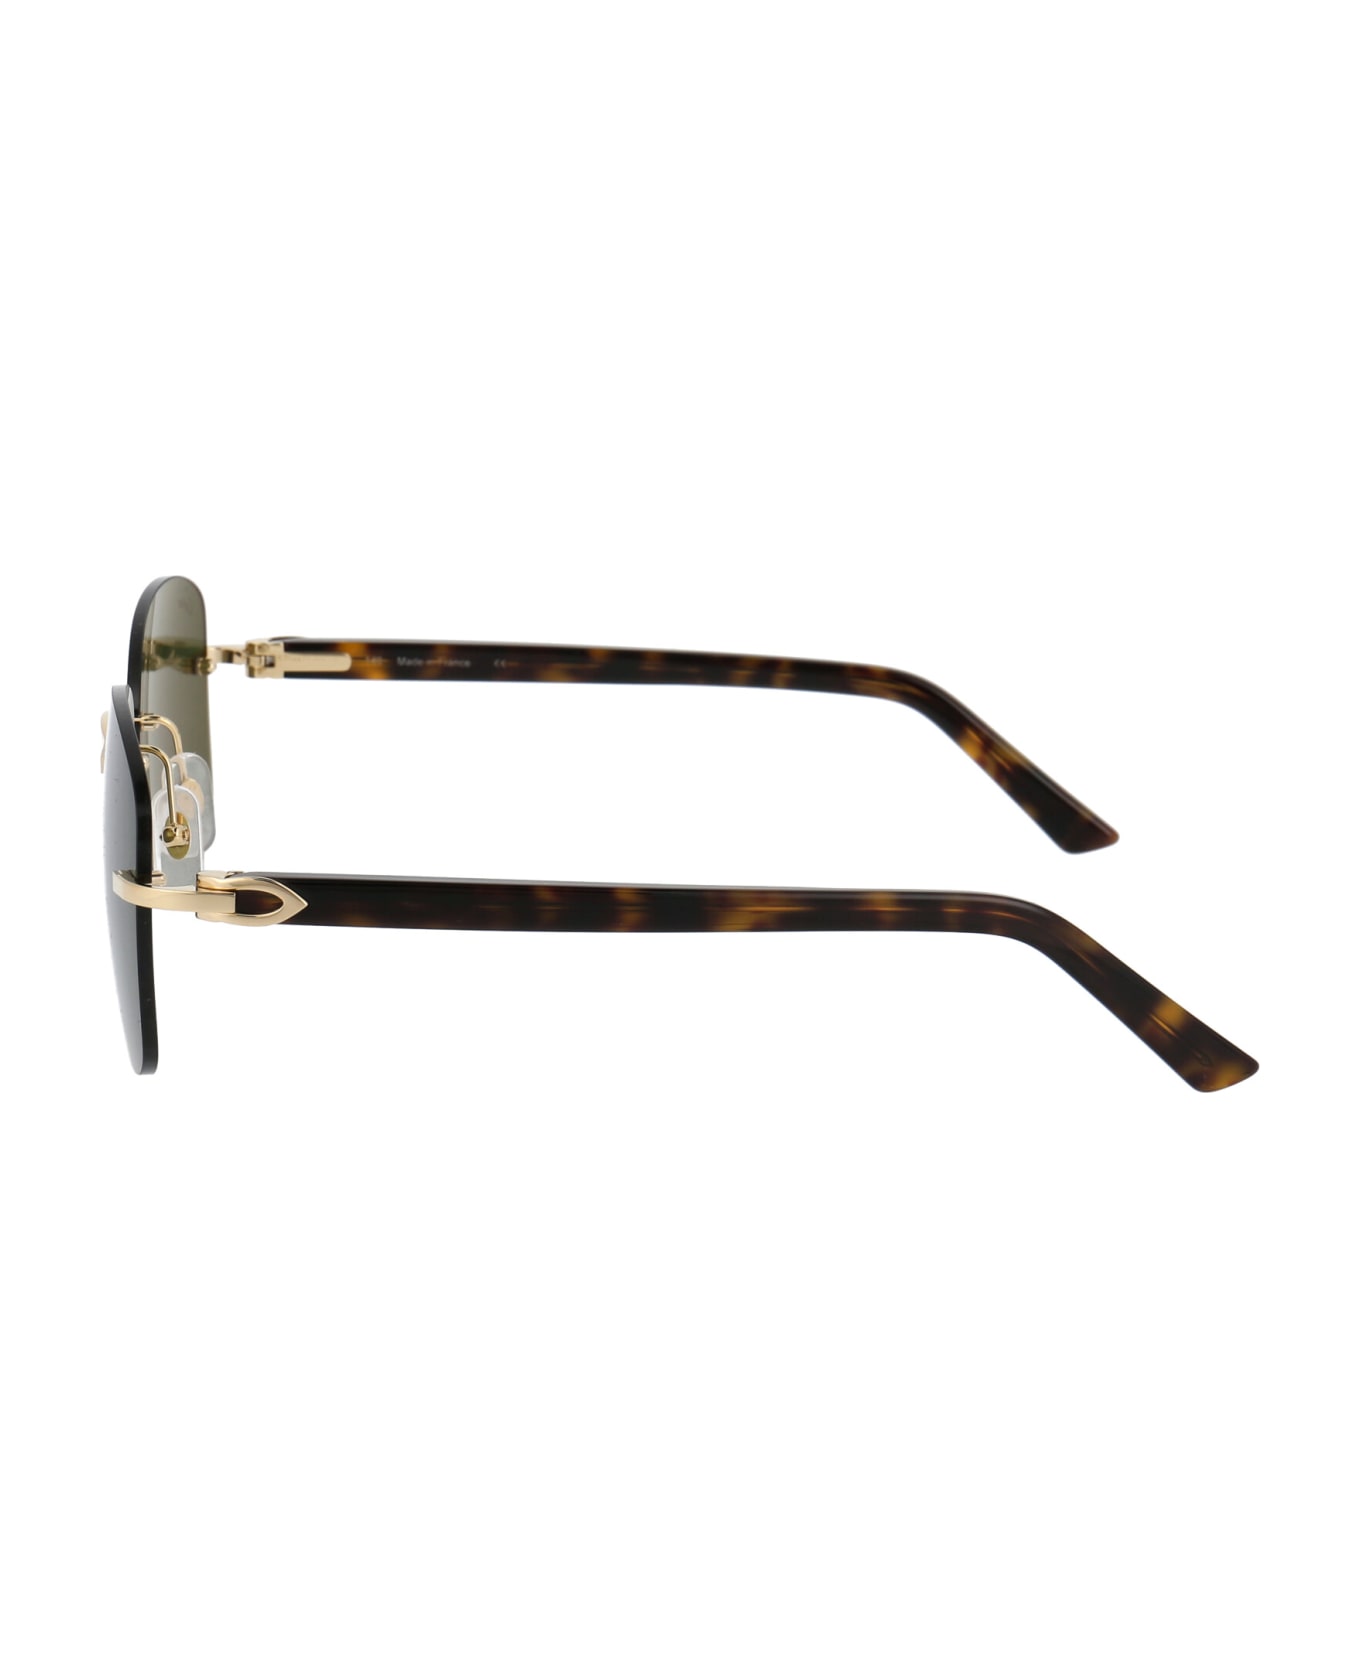 Cartier Eyewear Ct0227s Sunglasses - 002 GOLD HAVANA GREEN サングラス